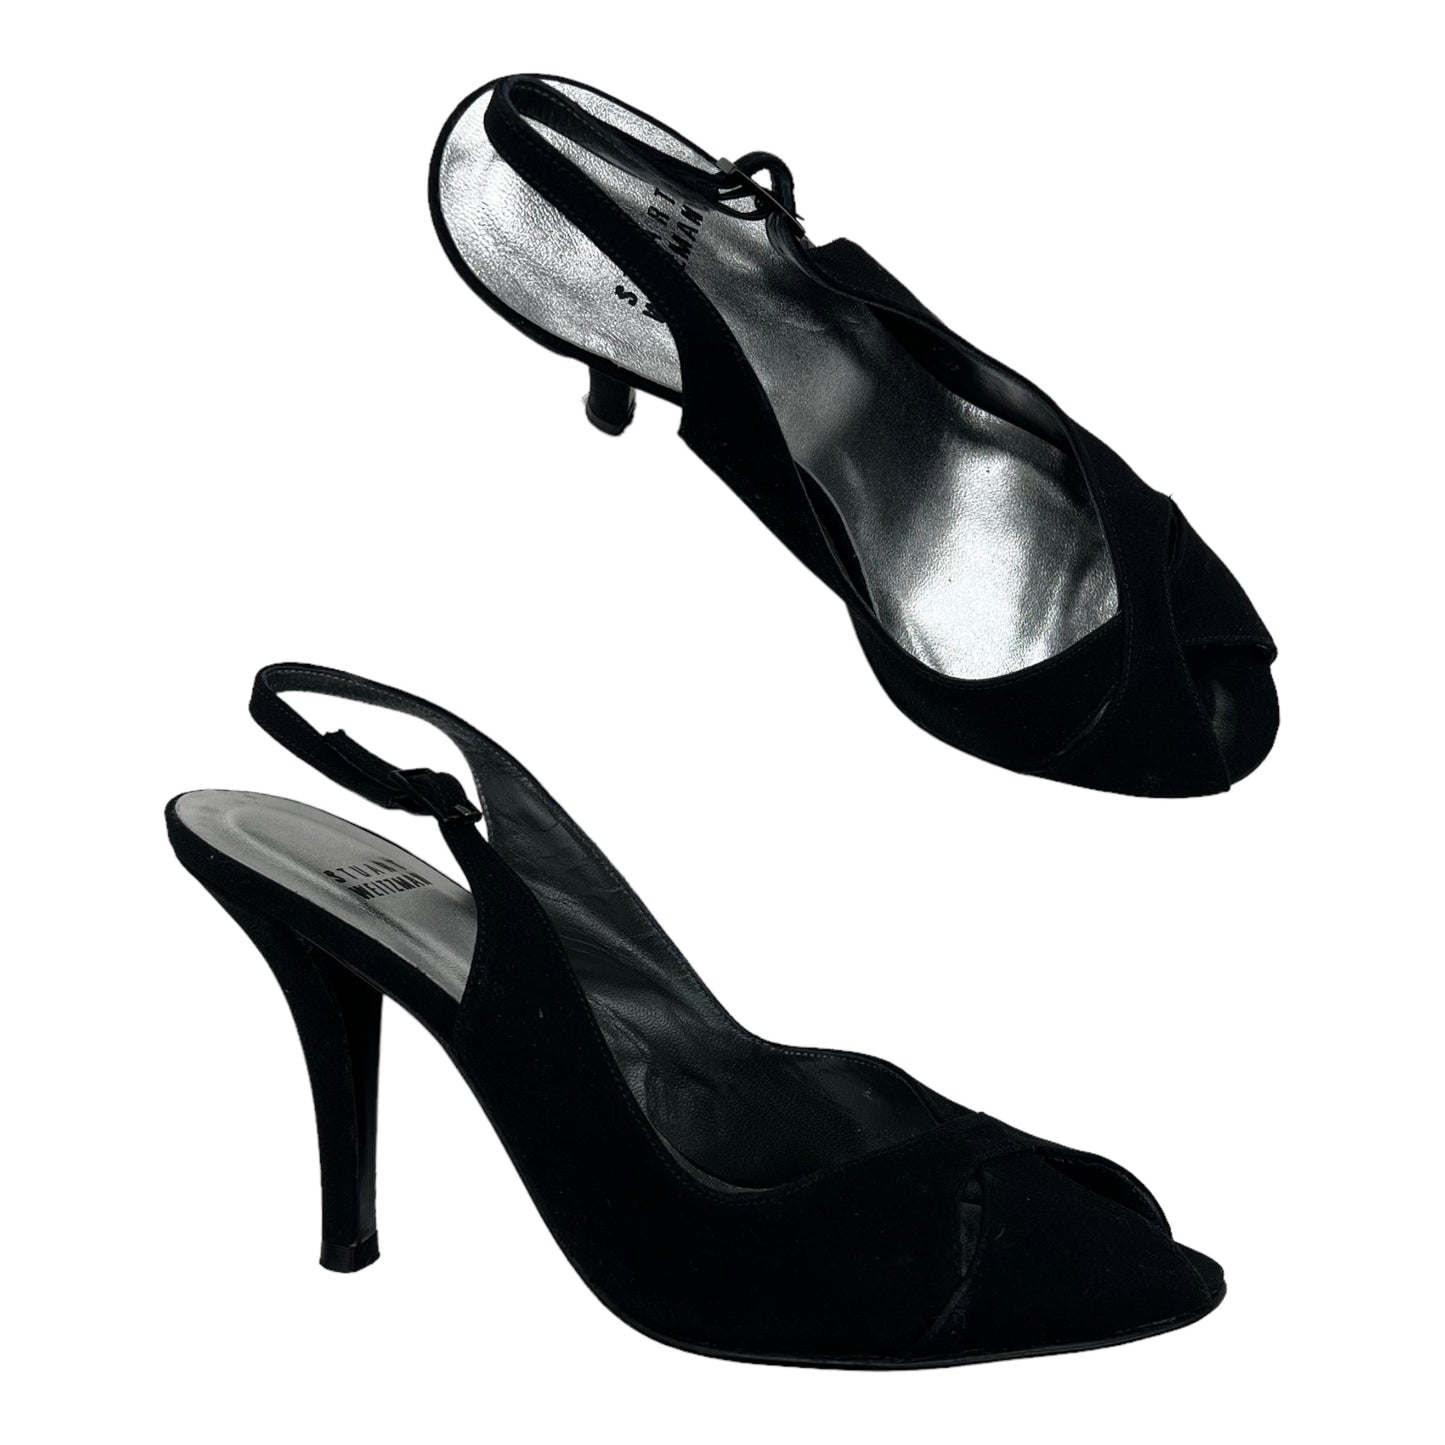 Shoes Heels Stiletto By Stuart Weitzman  Size: 6.5